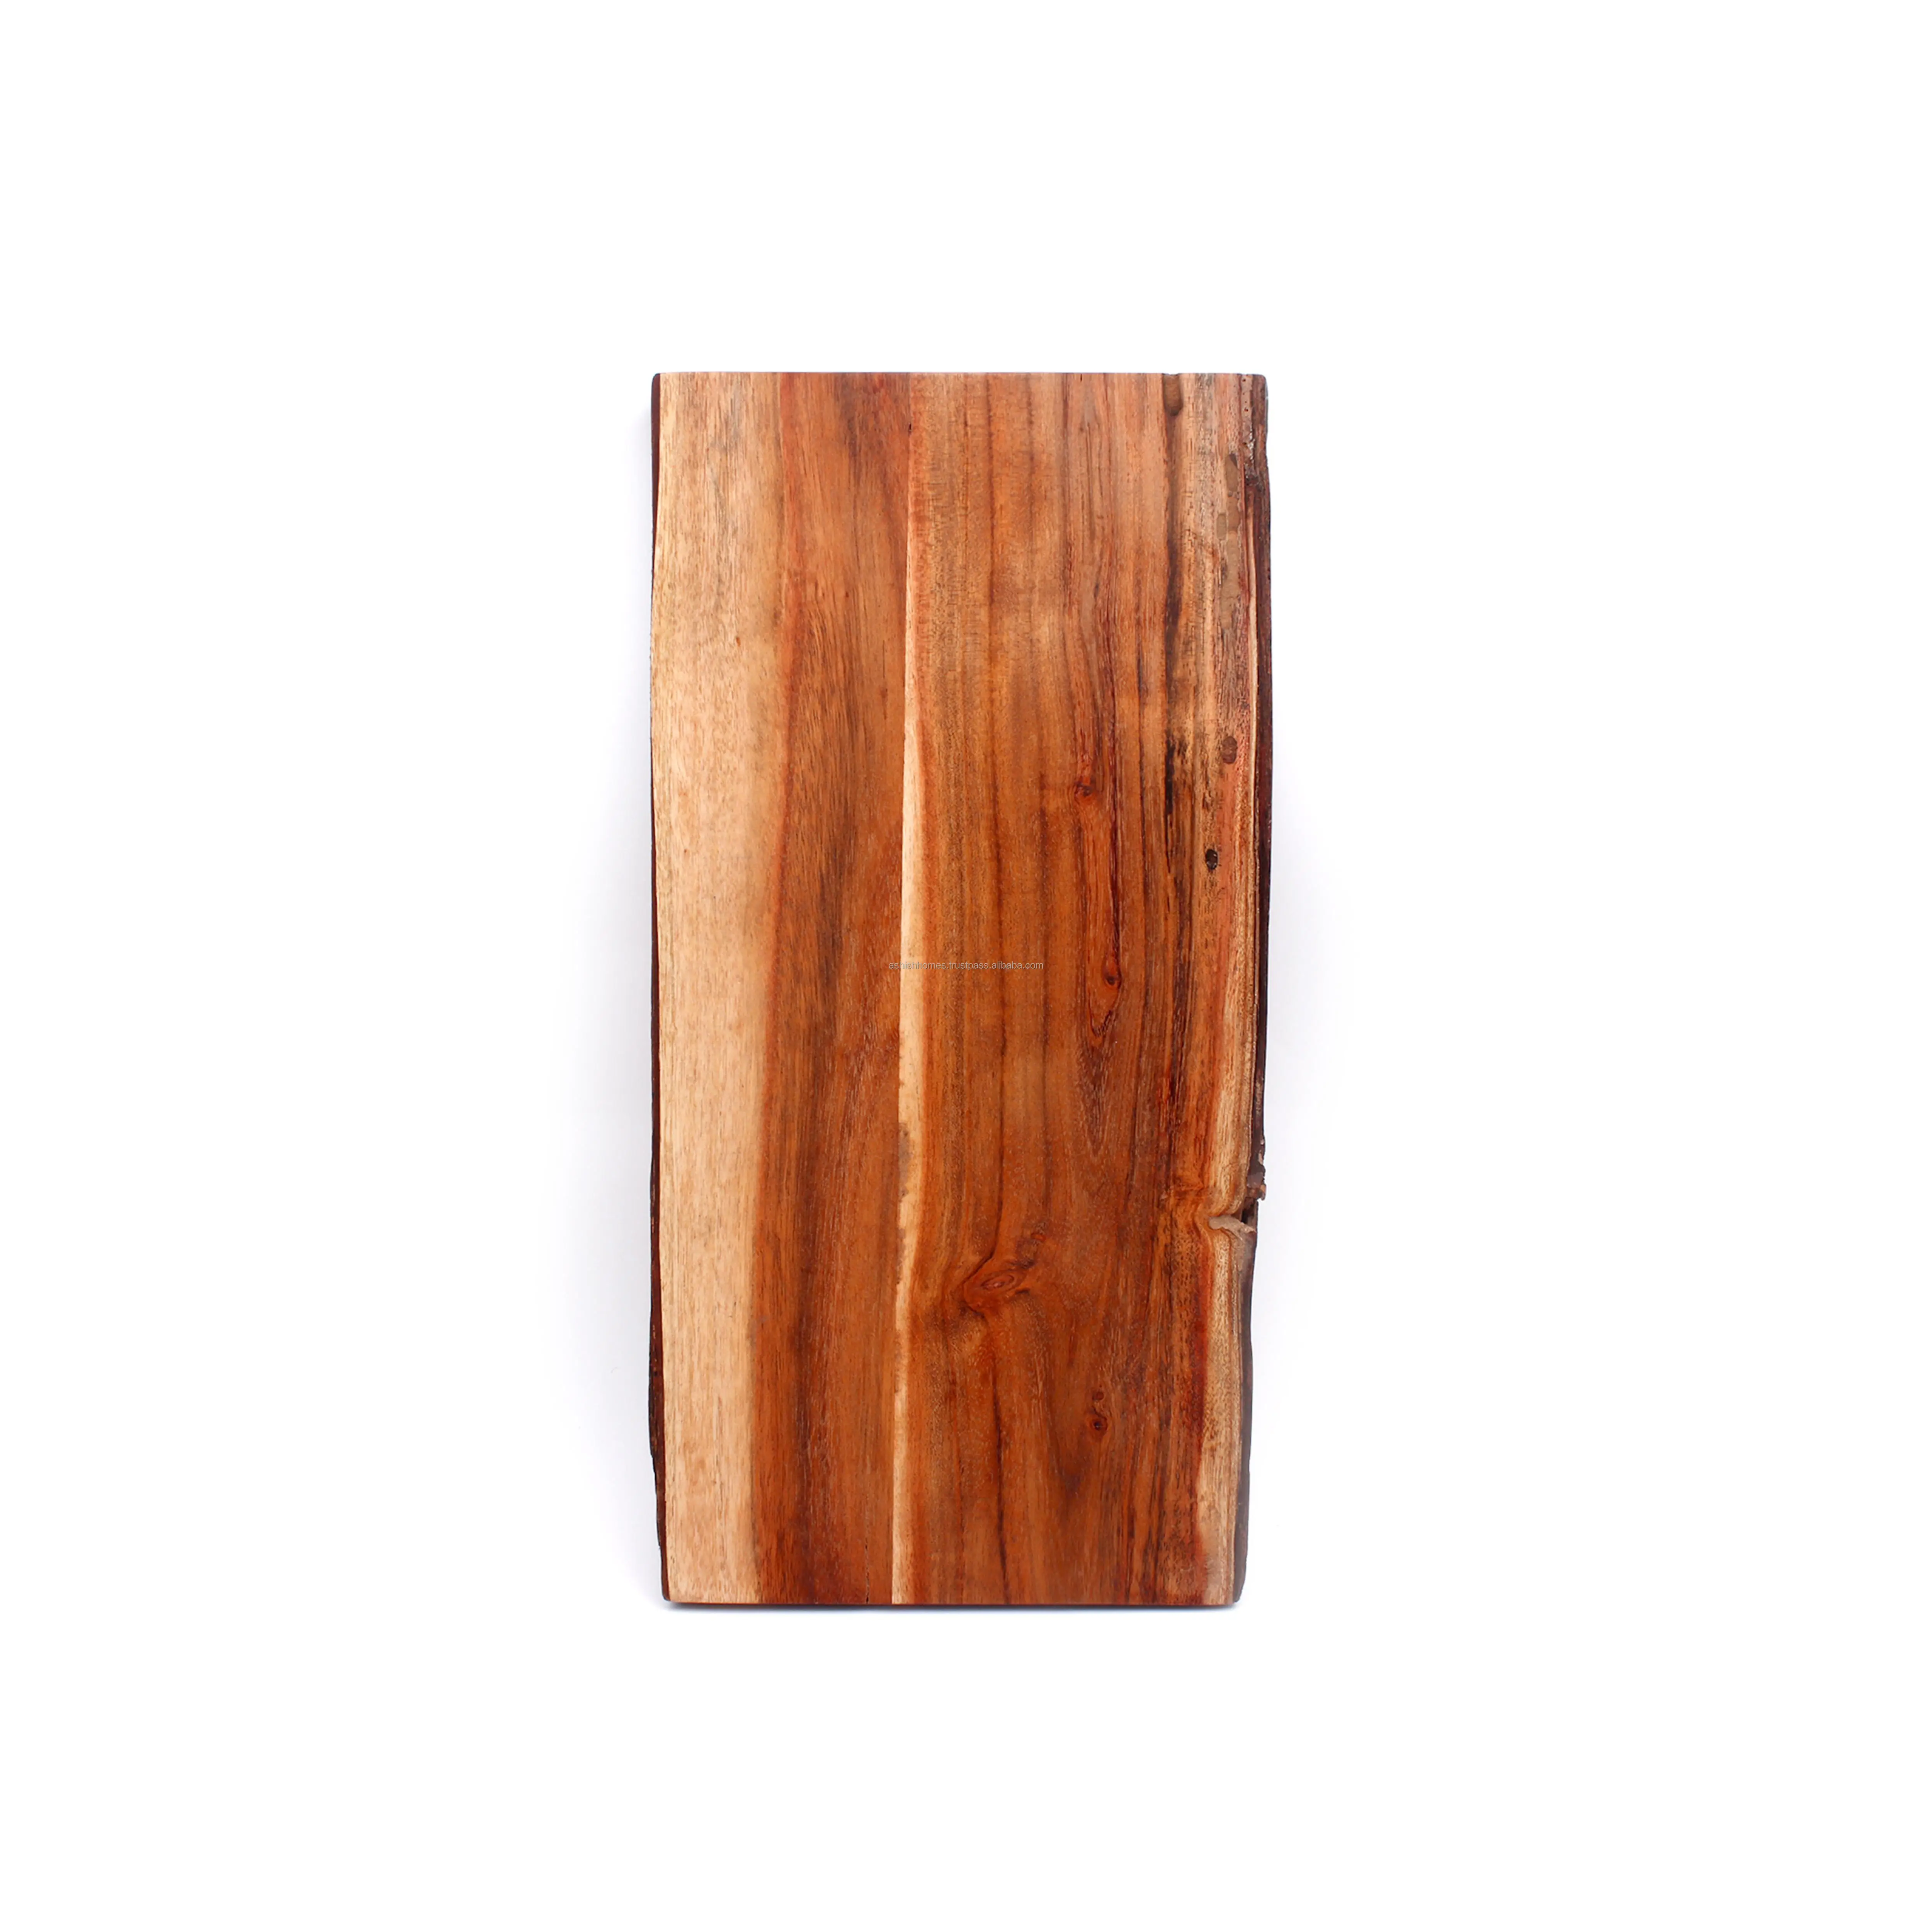 45x22x15cms Handmade Acacia Wood Cutting Board Fruit Wooden